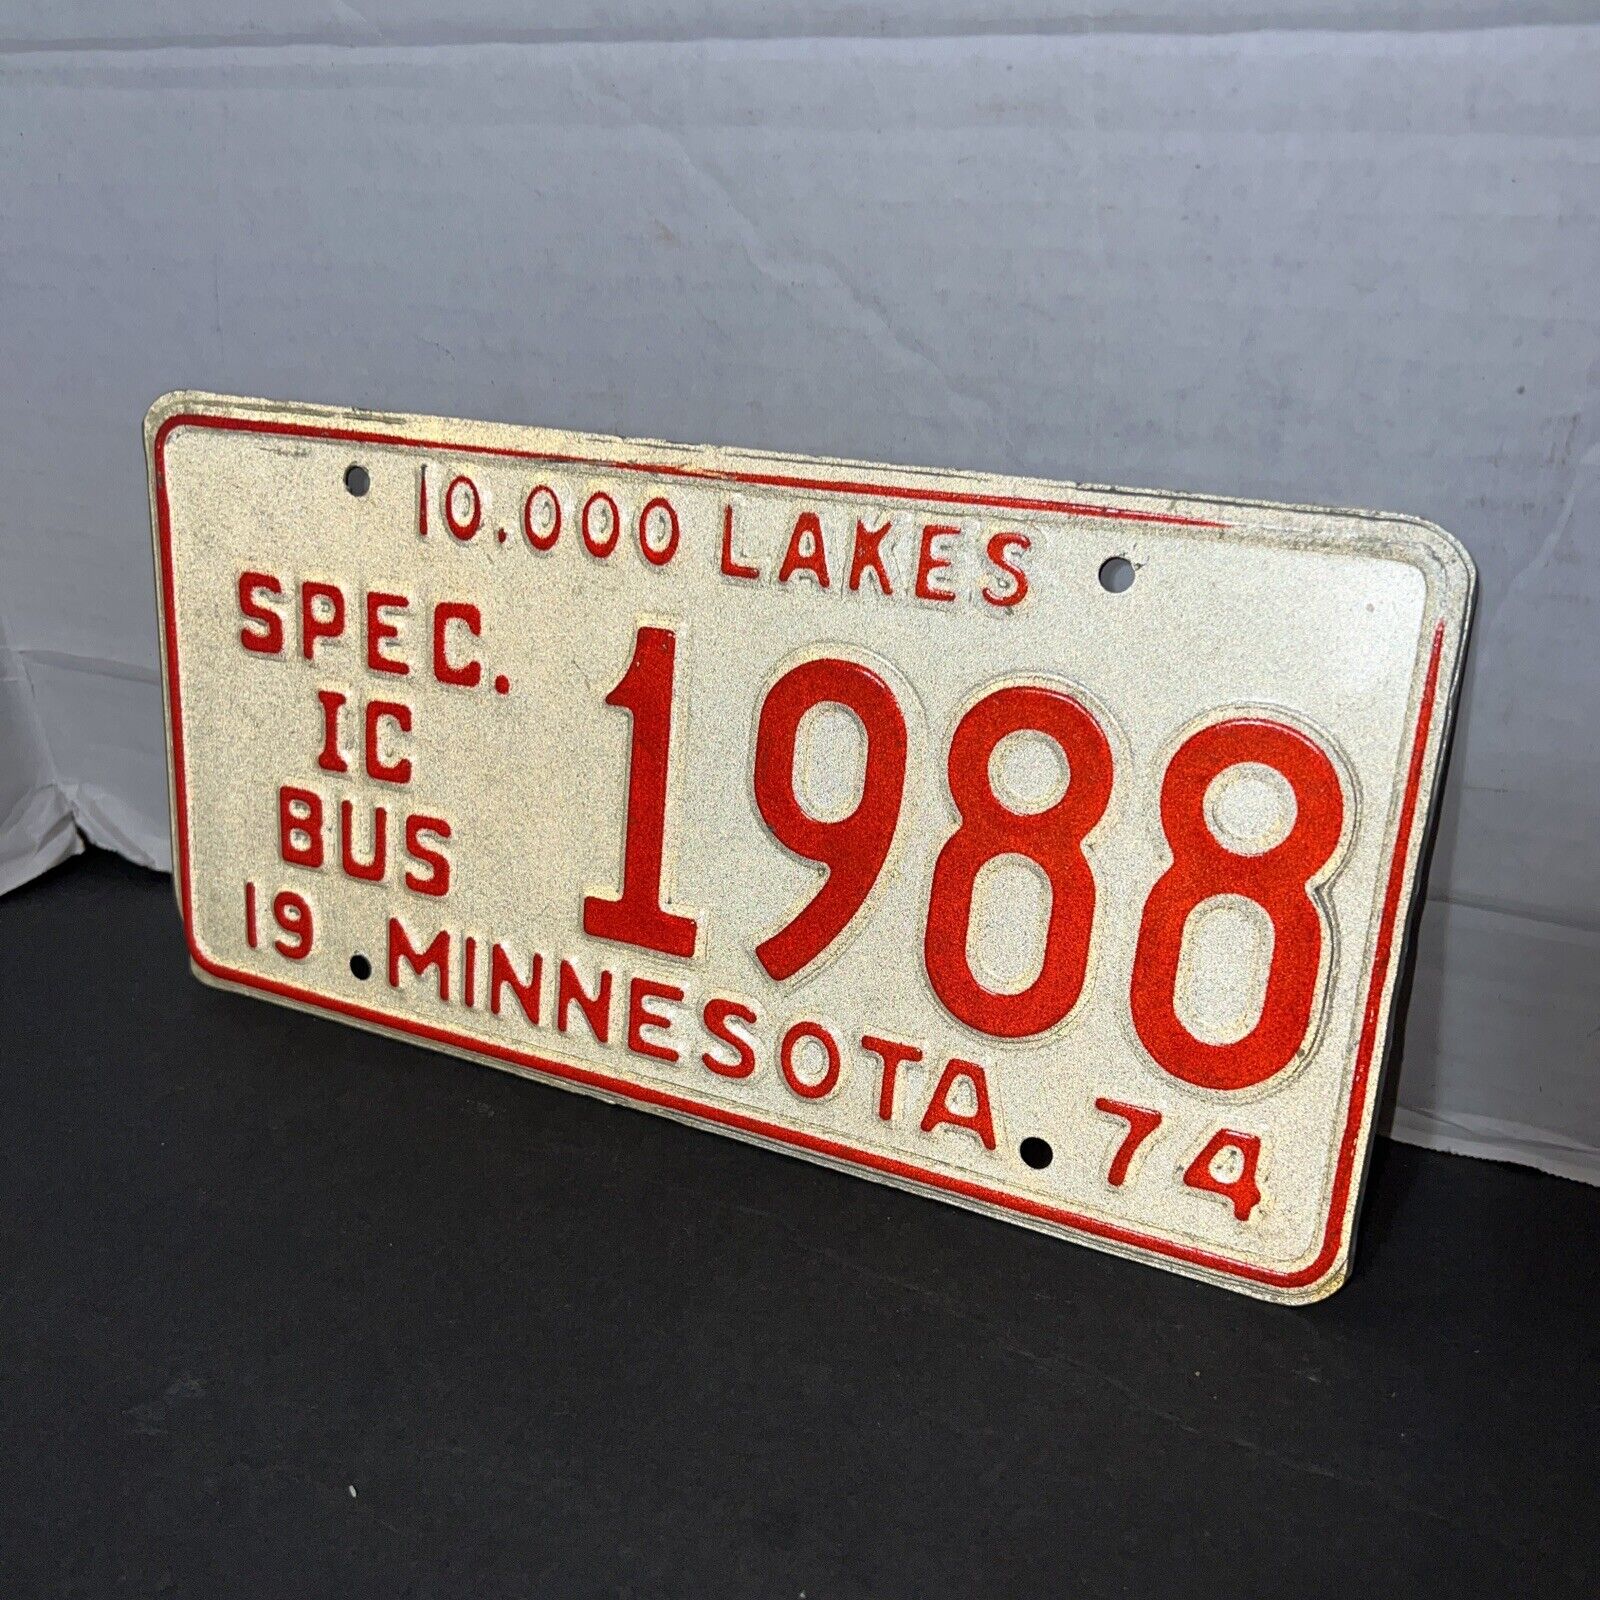 1974 MINNESOTA 10,000 Lakes LICENSE SPEC. IC BUS PLATE 1988